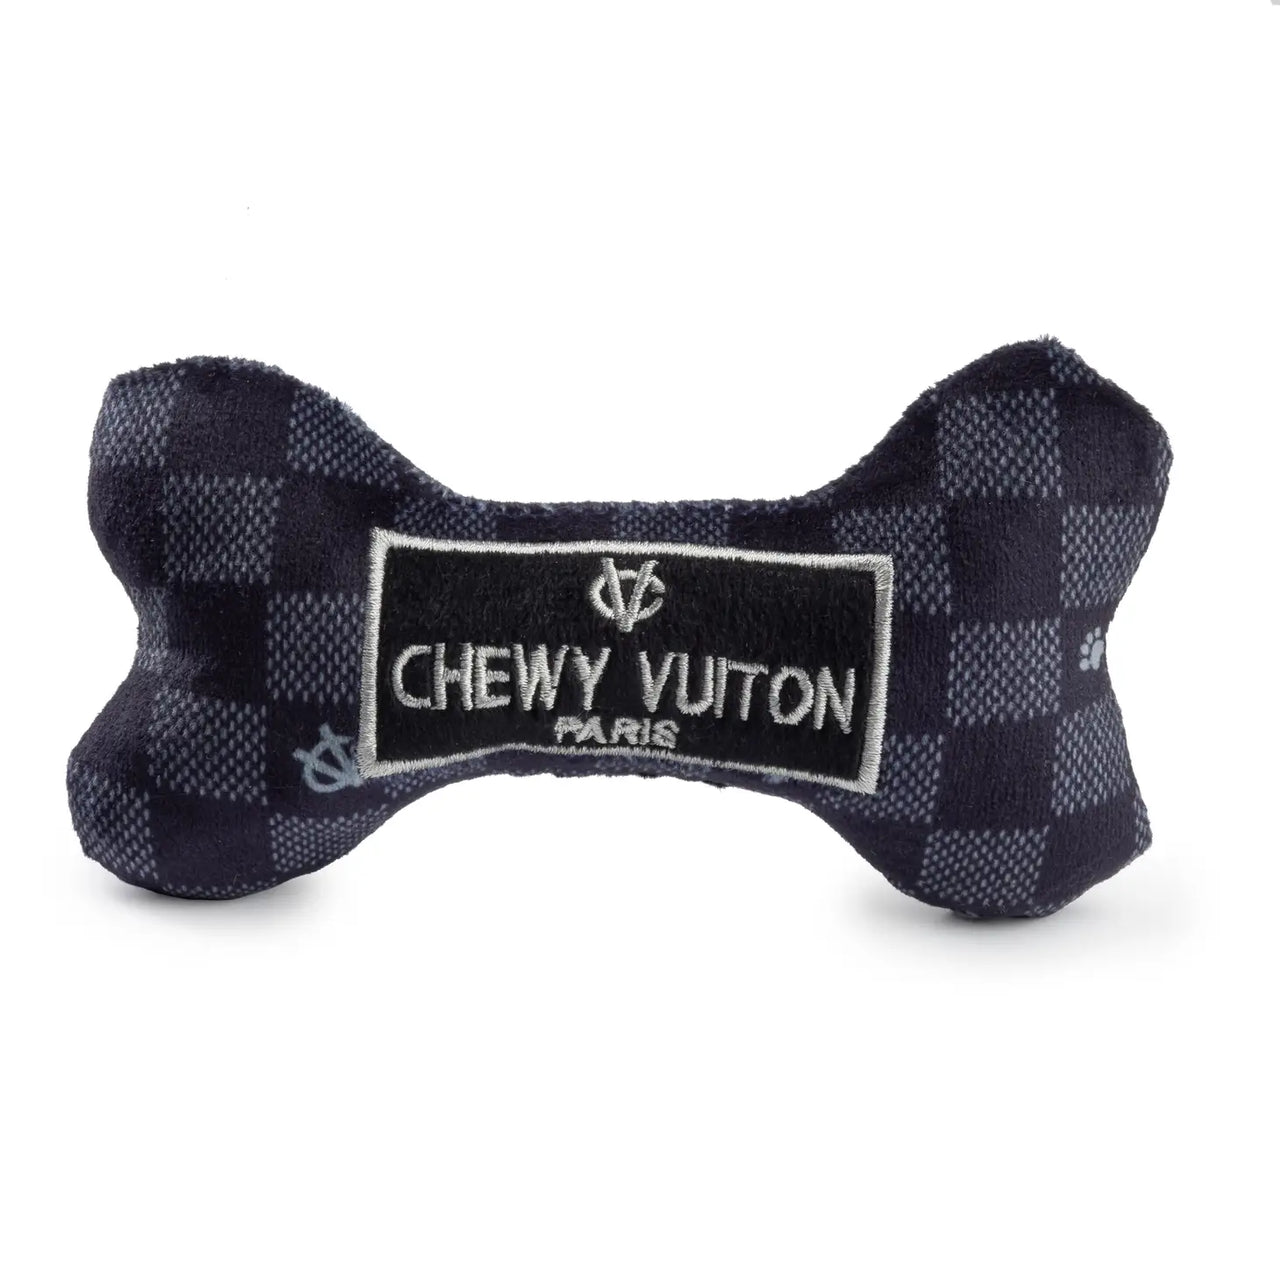 HAUTE DIGGITY DOG Checker Chewy Vuiton Dog Bowl - BROWN COMBO